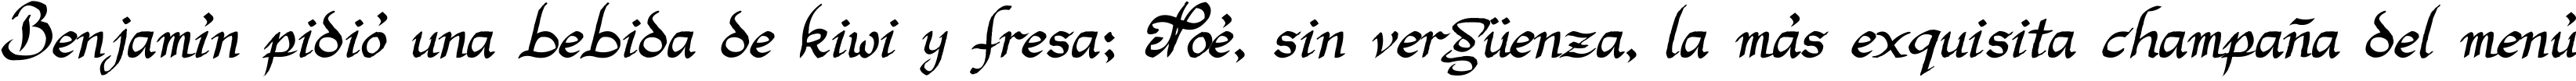 Пример написания шрифтом Argor Man Scaqh текста на испанском